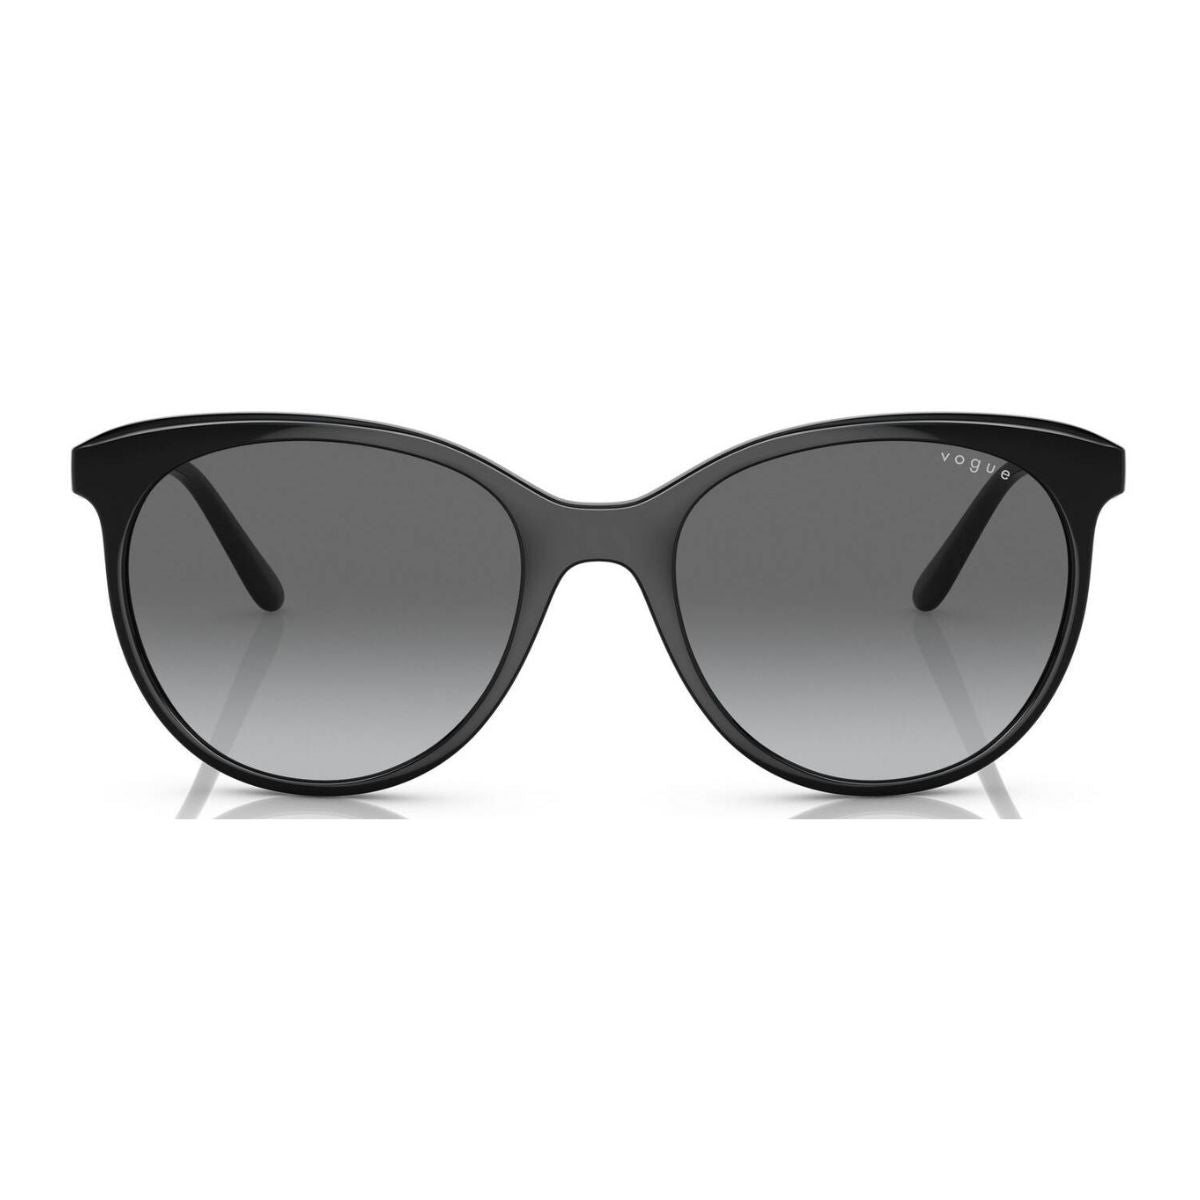 "Vogue Sunglasses For Womens At Optorium"